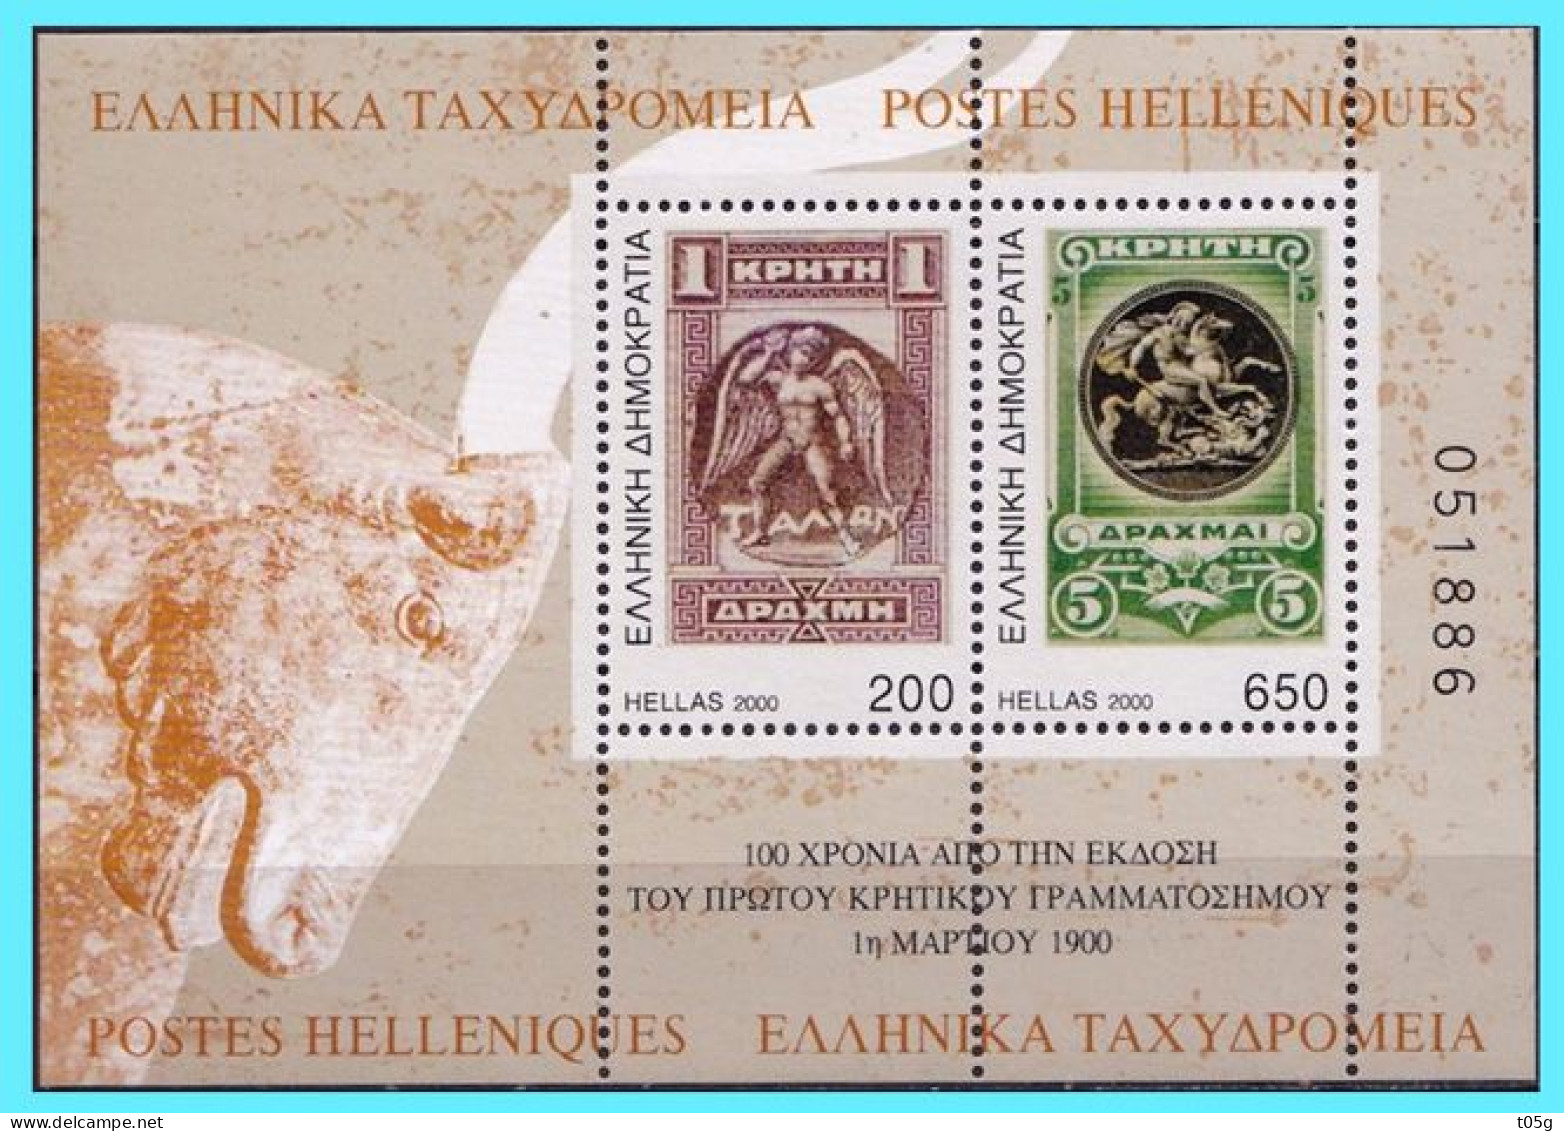 GREECE- GRECE- HELLAS 2000:  The Stamps Of Crete Miniature Sheet MNH** - Nuovi